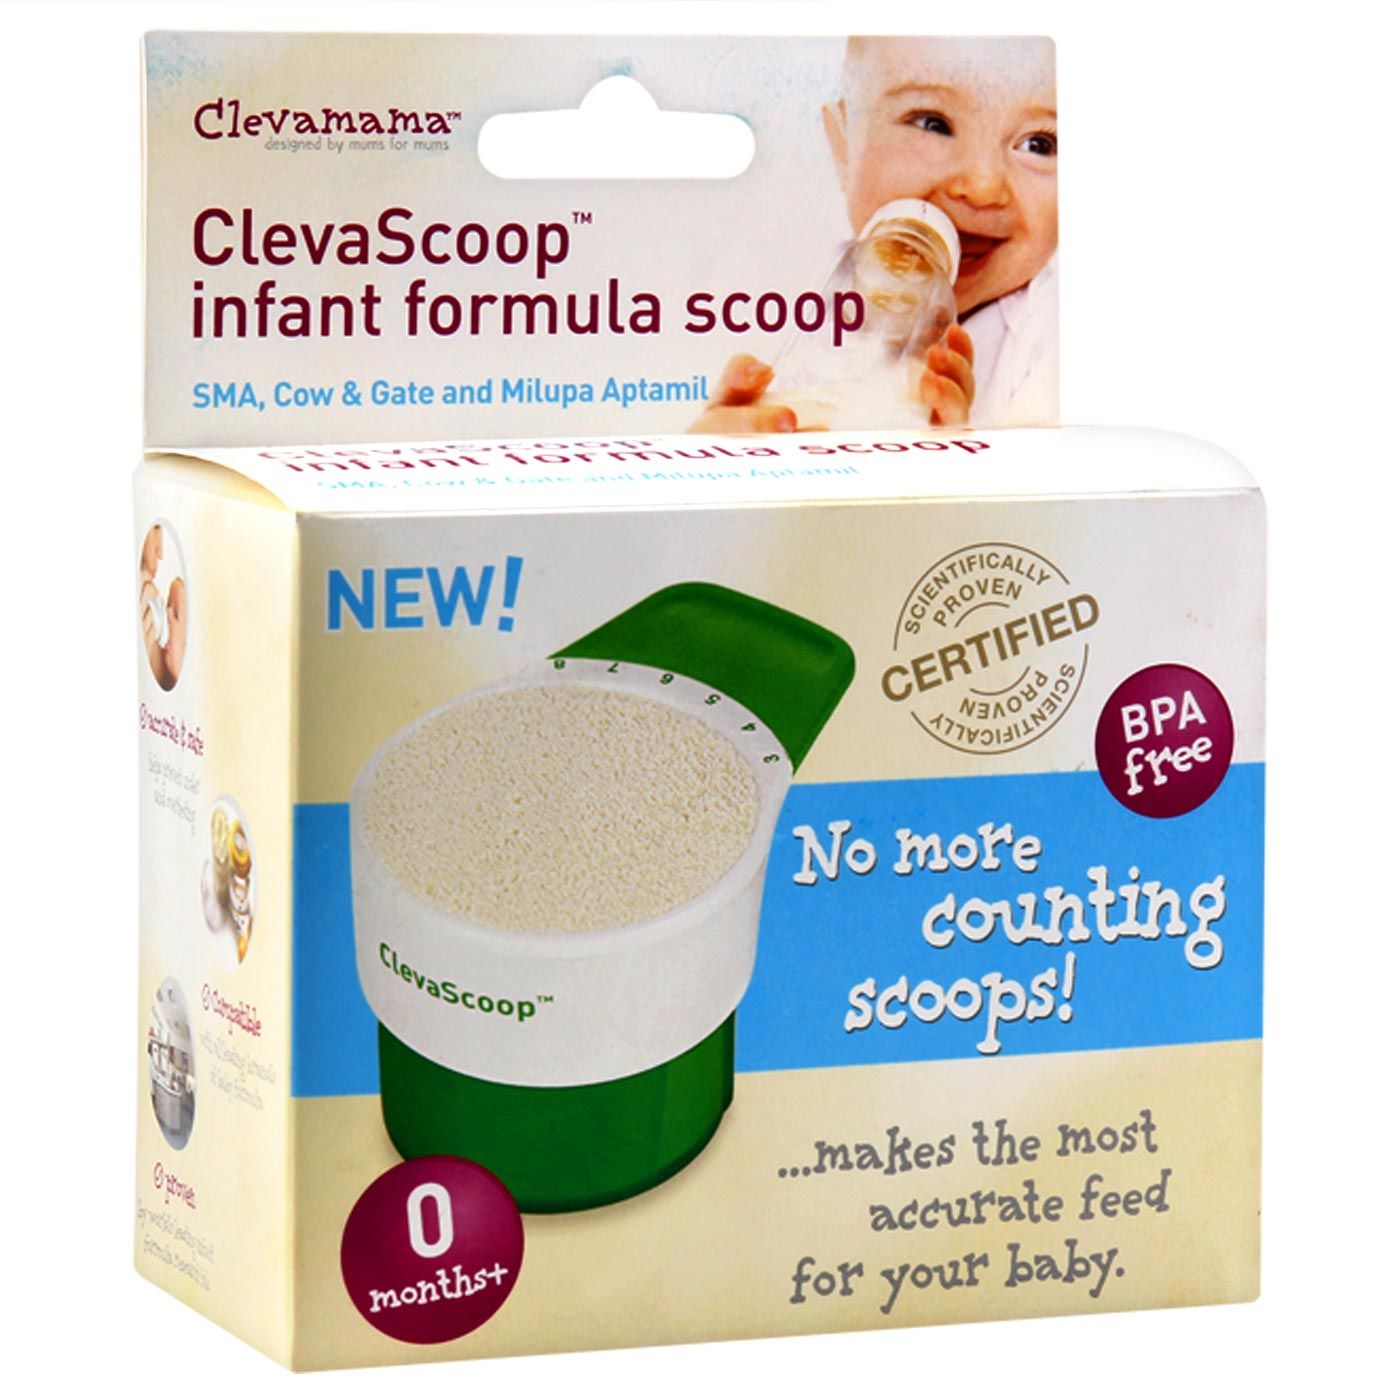 Clevamama Scoop Infant Formula Scoop - 6